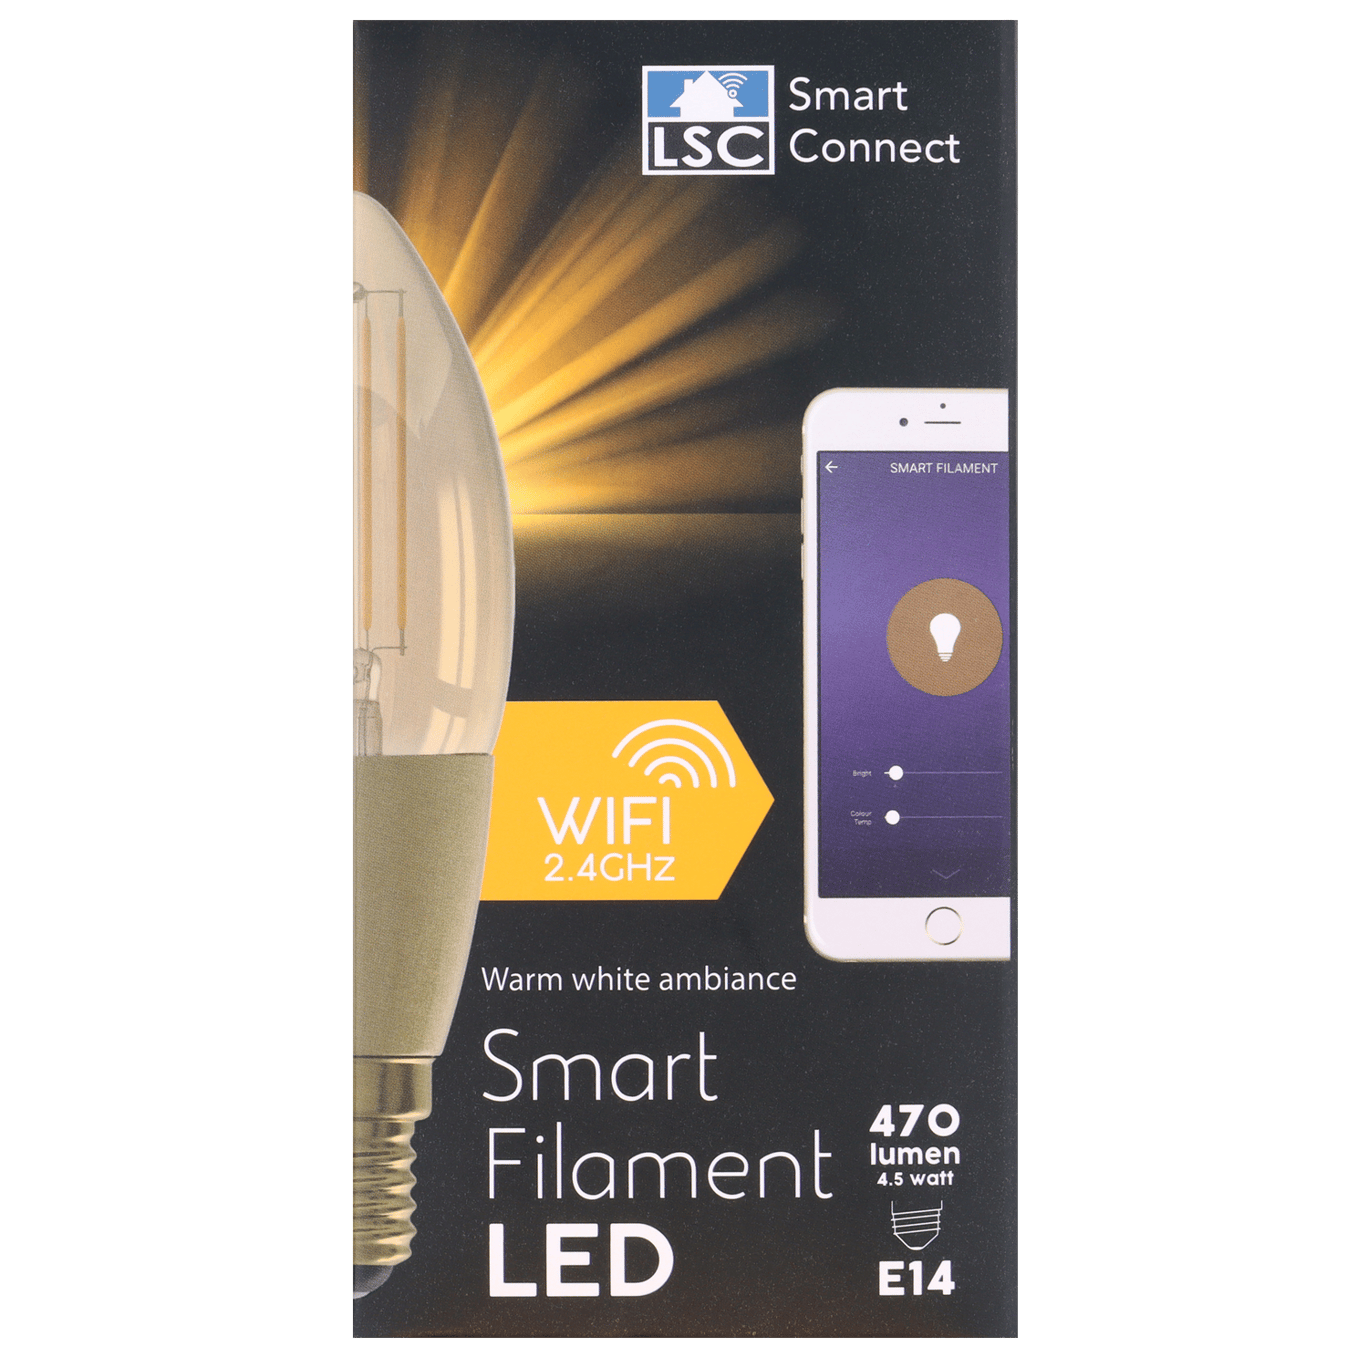 Verbinding Mobiliseren evenwicht LSC Smart Connect slimme filament-ledlamp | Action.com